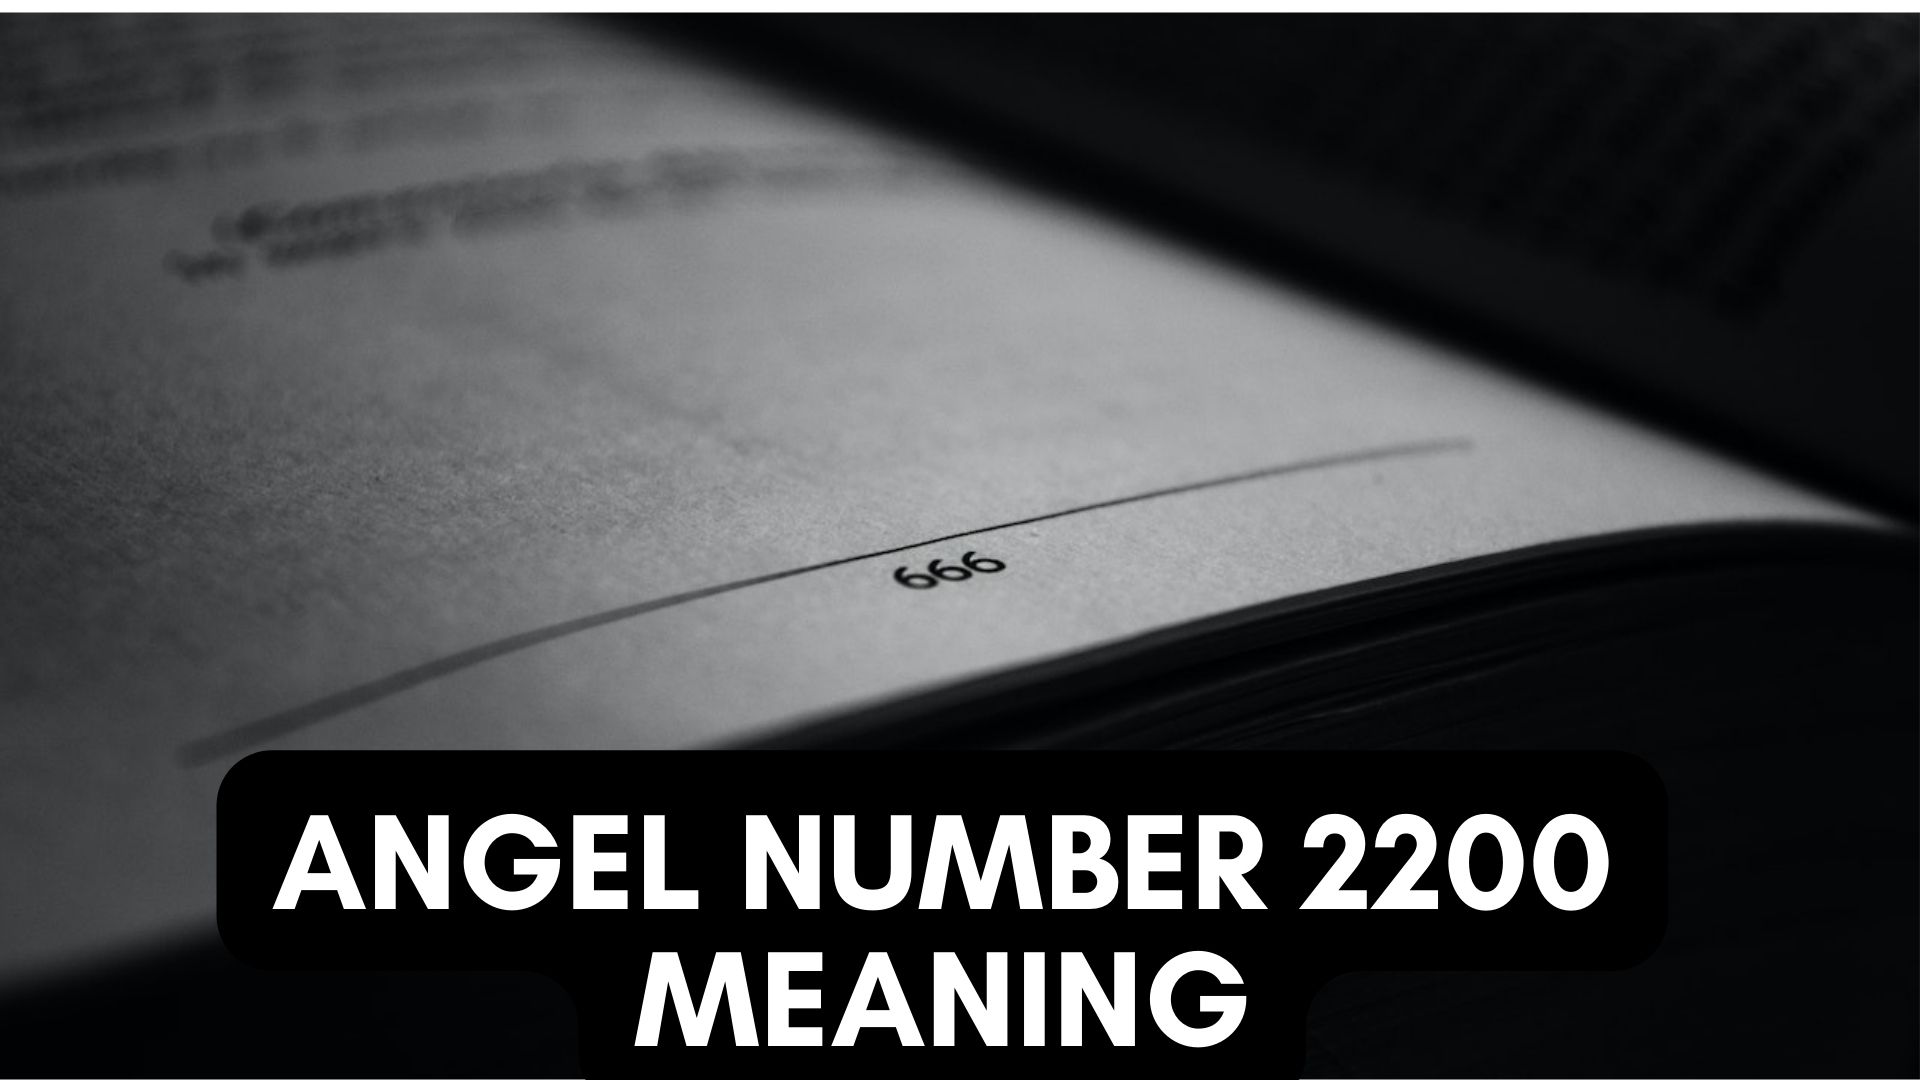 Angel Number 2200 Meaning - Symbolism And Spiritual Interpretation